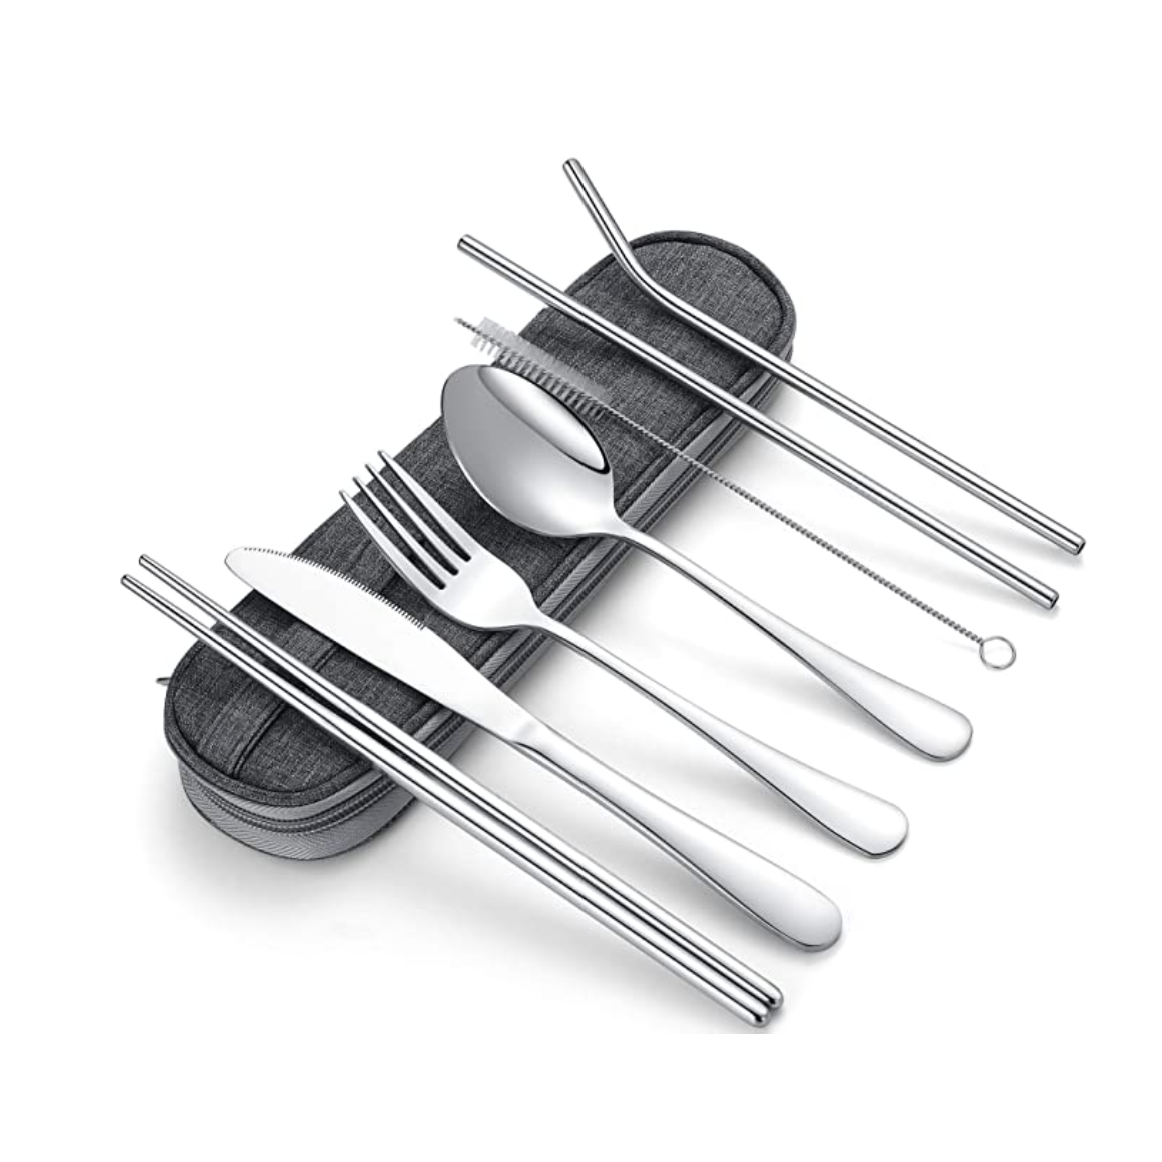 8PCS/Set Stainless Steel Cutlery Fork Spoon Straw Travel Picnic School Tableware 